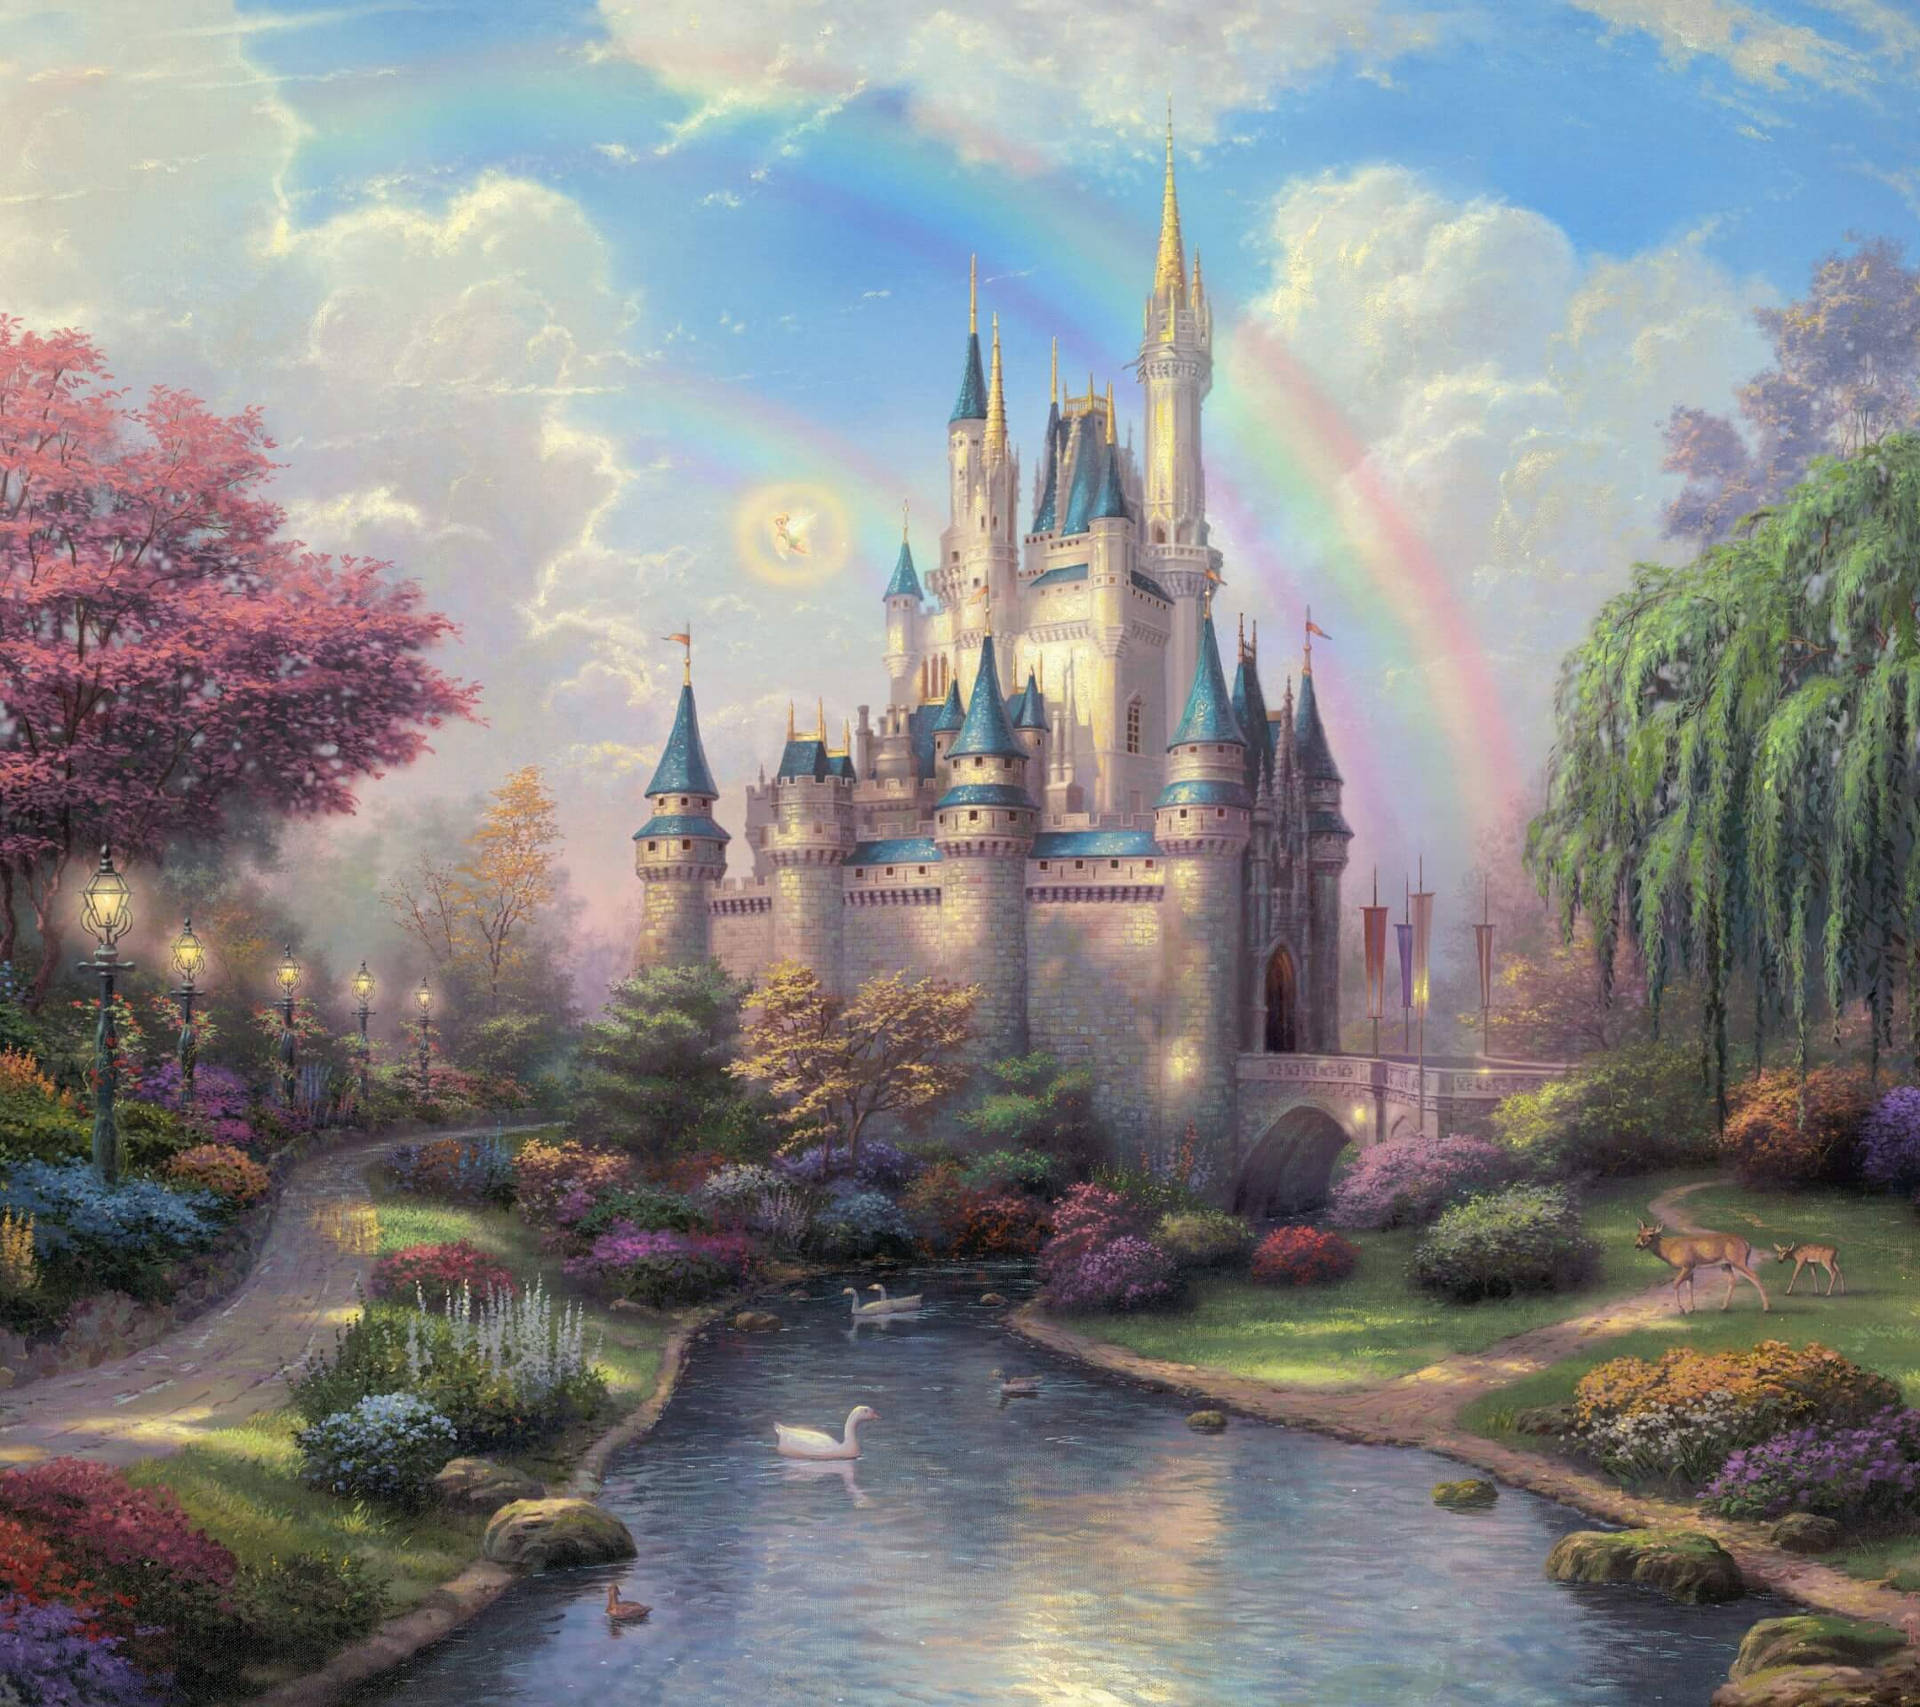 Magical Castle Art Image Wallpaper